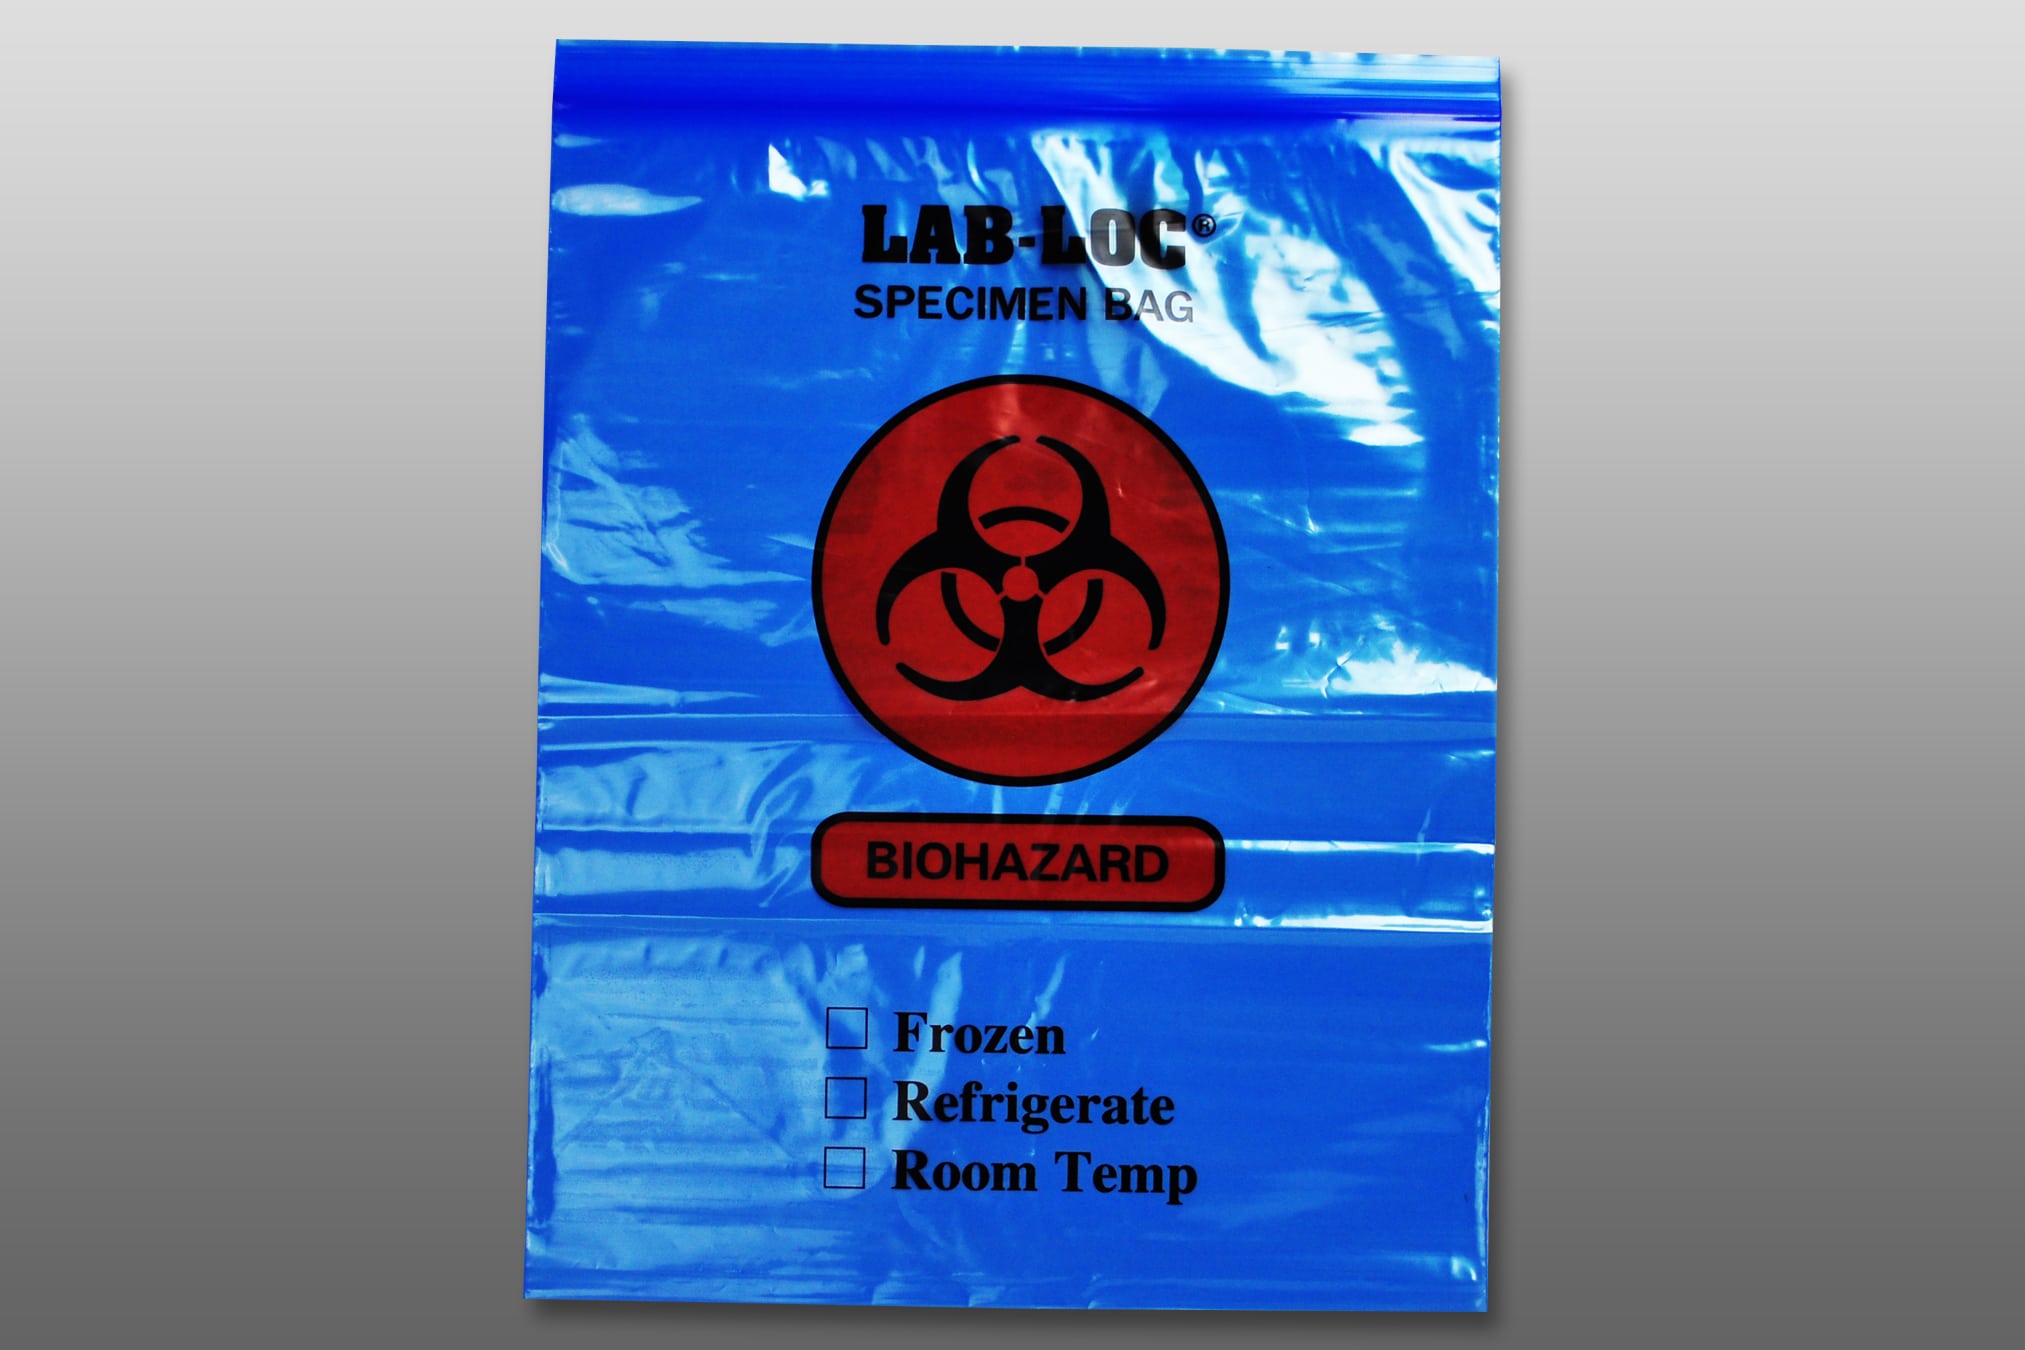 12" X 15" Blue Tint Reclosable 2-Wall Specimen Transfer Bag (Biohazard)